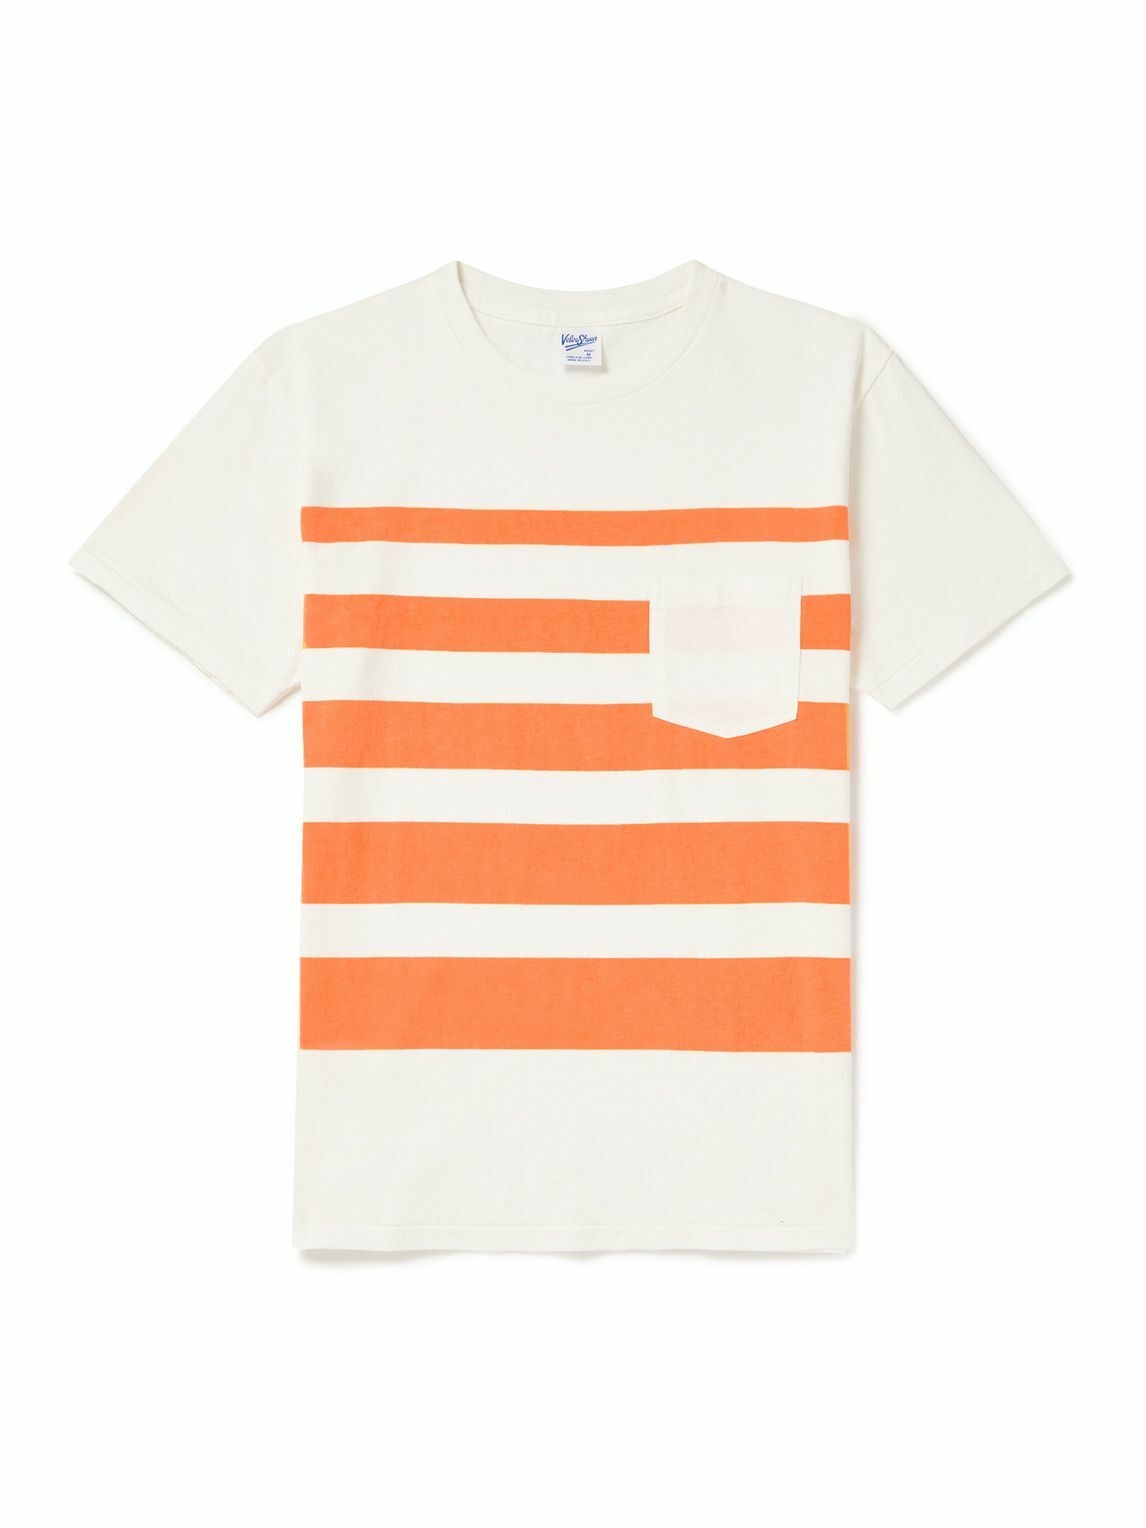 Velva Sheen - Wide Wave Striped Cotton-Jersey T-Shirt - White Velva Sheen